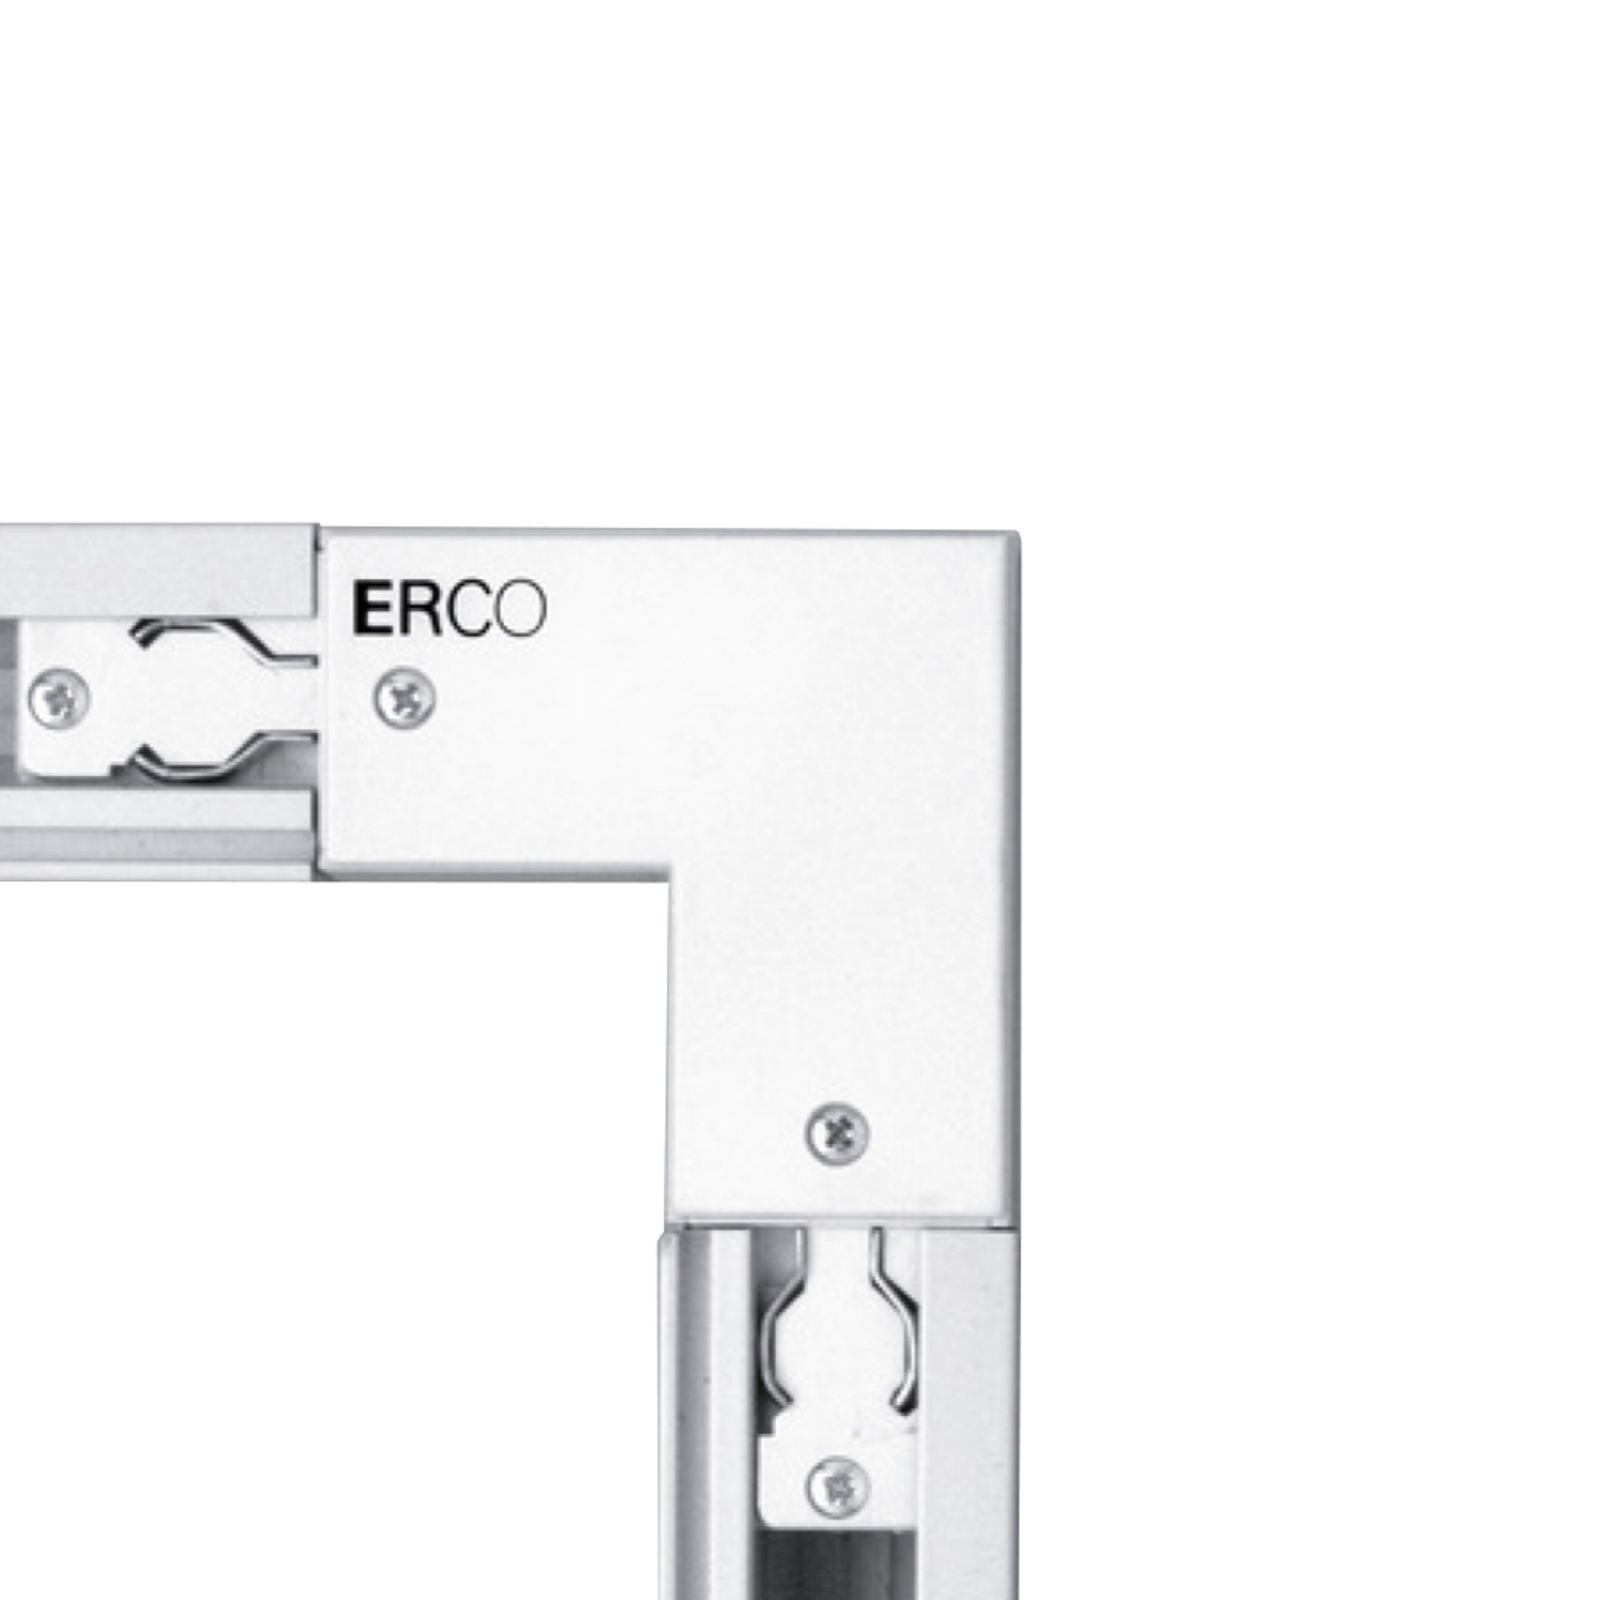 ERCO 3-faset hjørnekobling jord innvendig, hvit